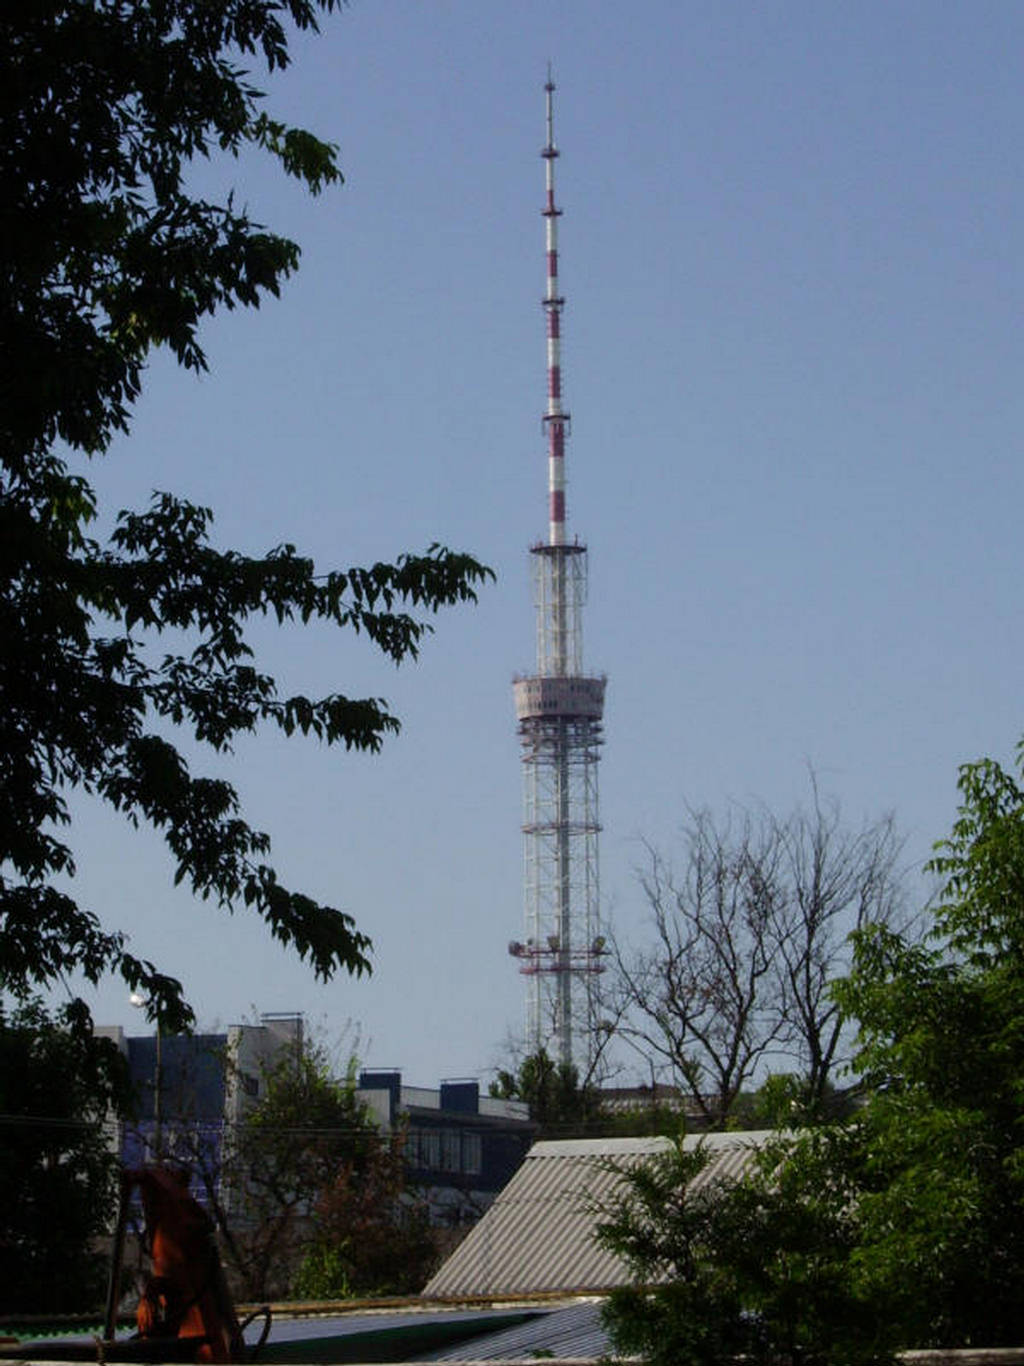 cn tower ukraine